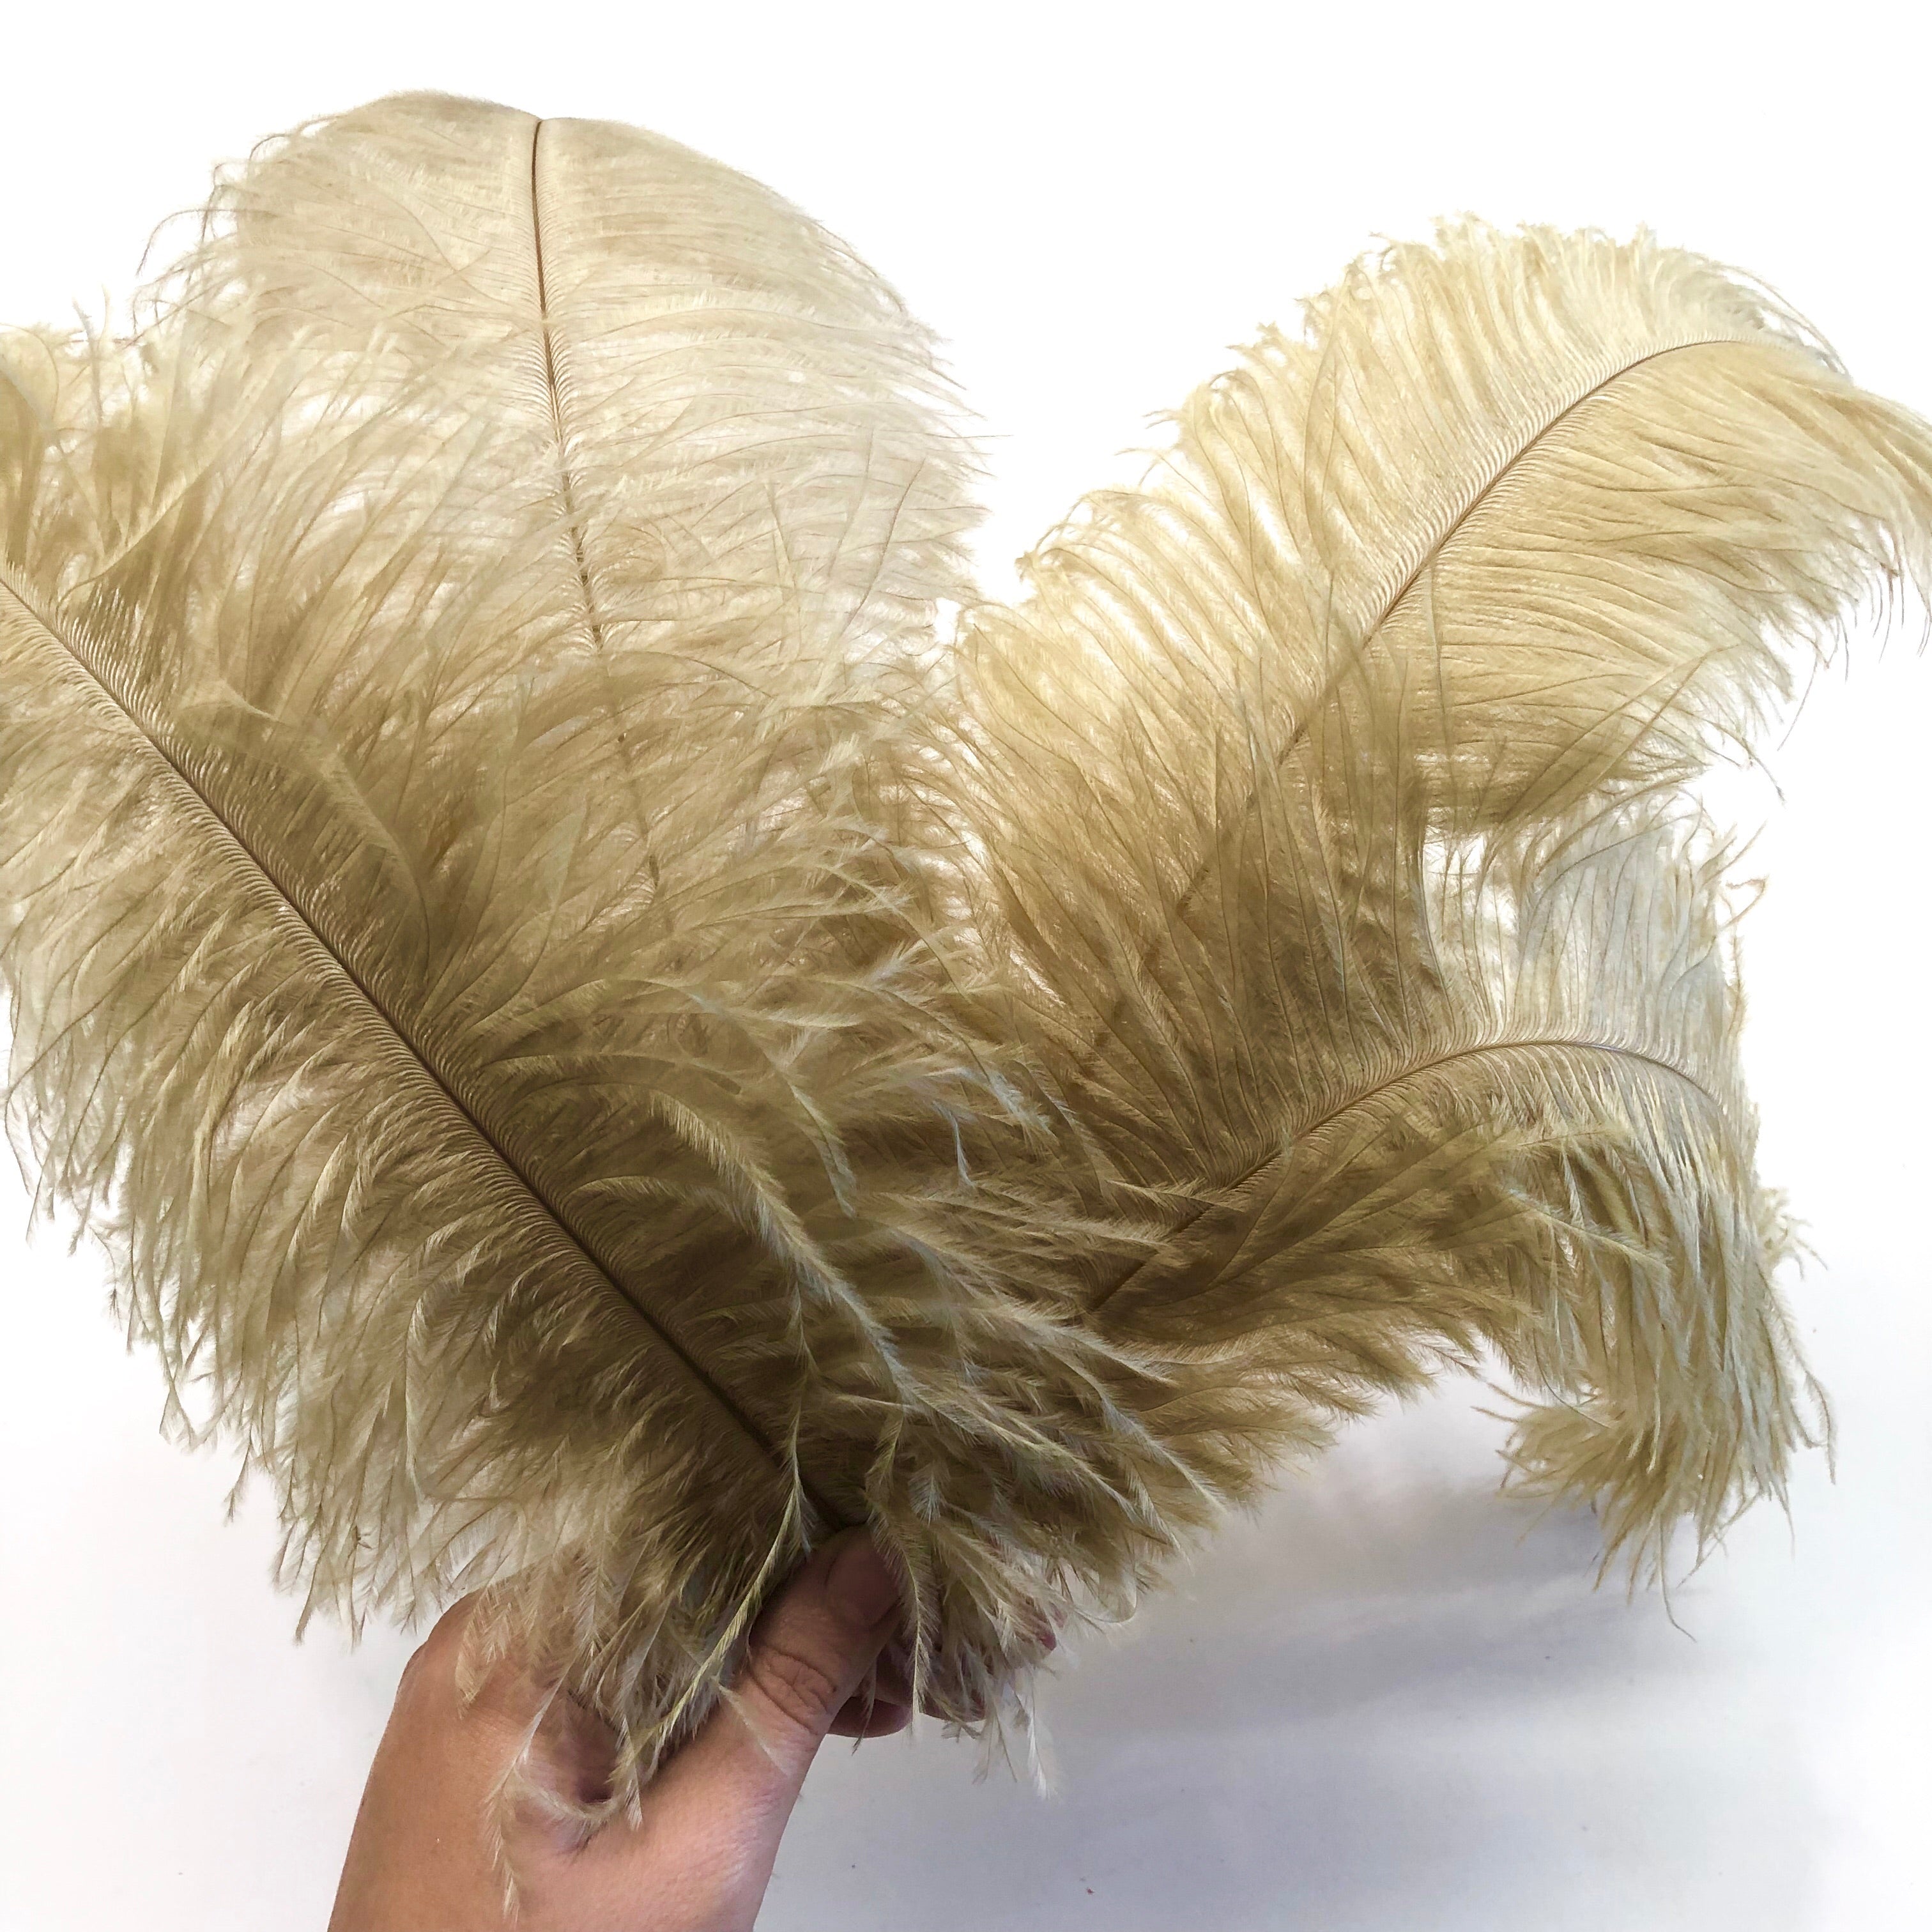 Ostrich Blondine Feather 25-40cm x 5 pcs - Gold ((SECONDS))